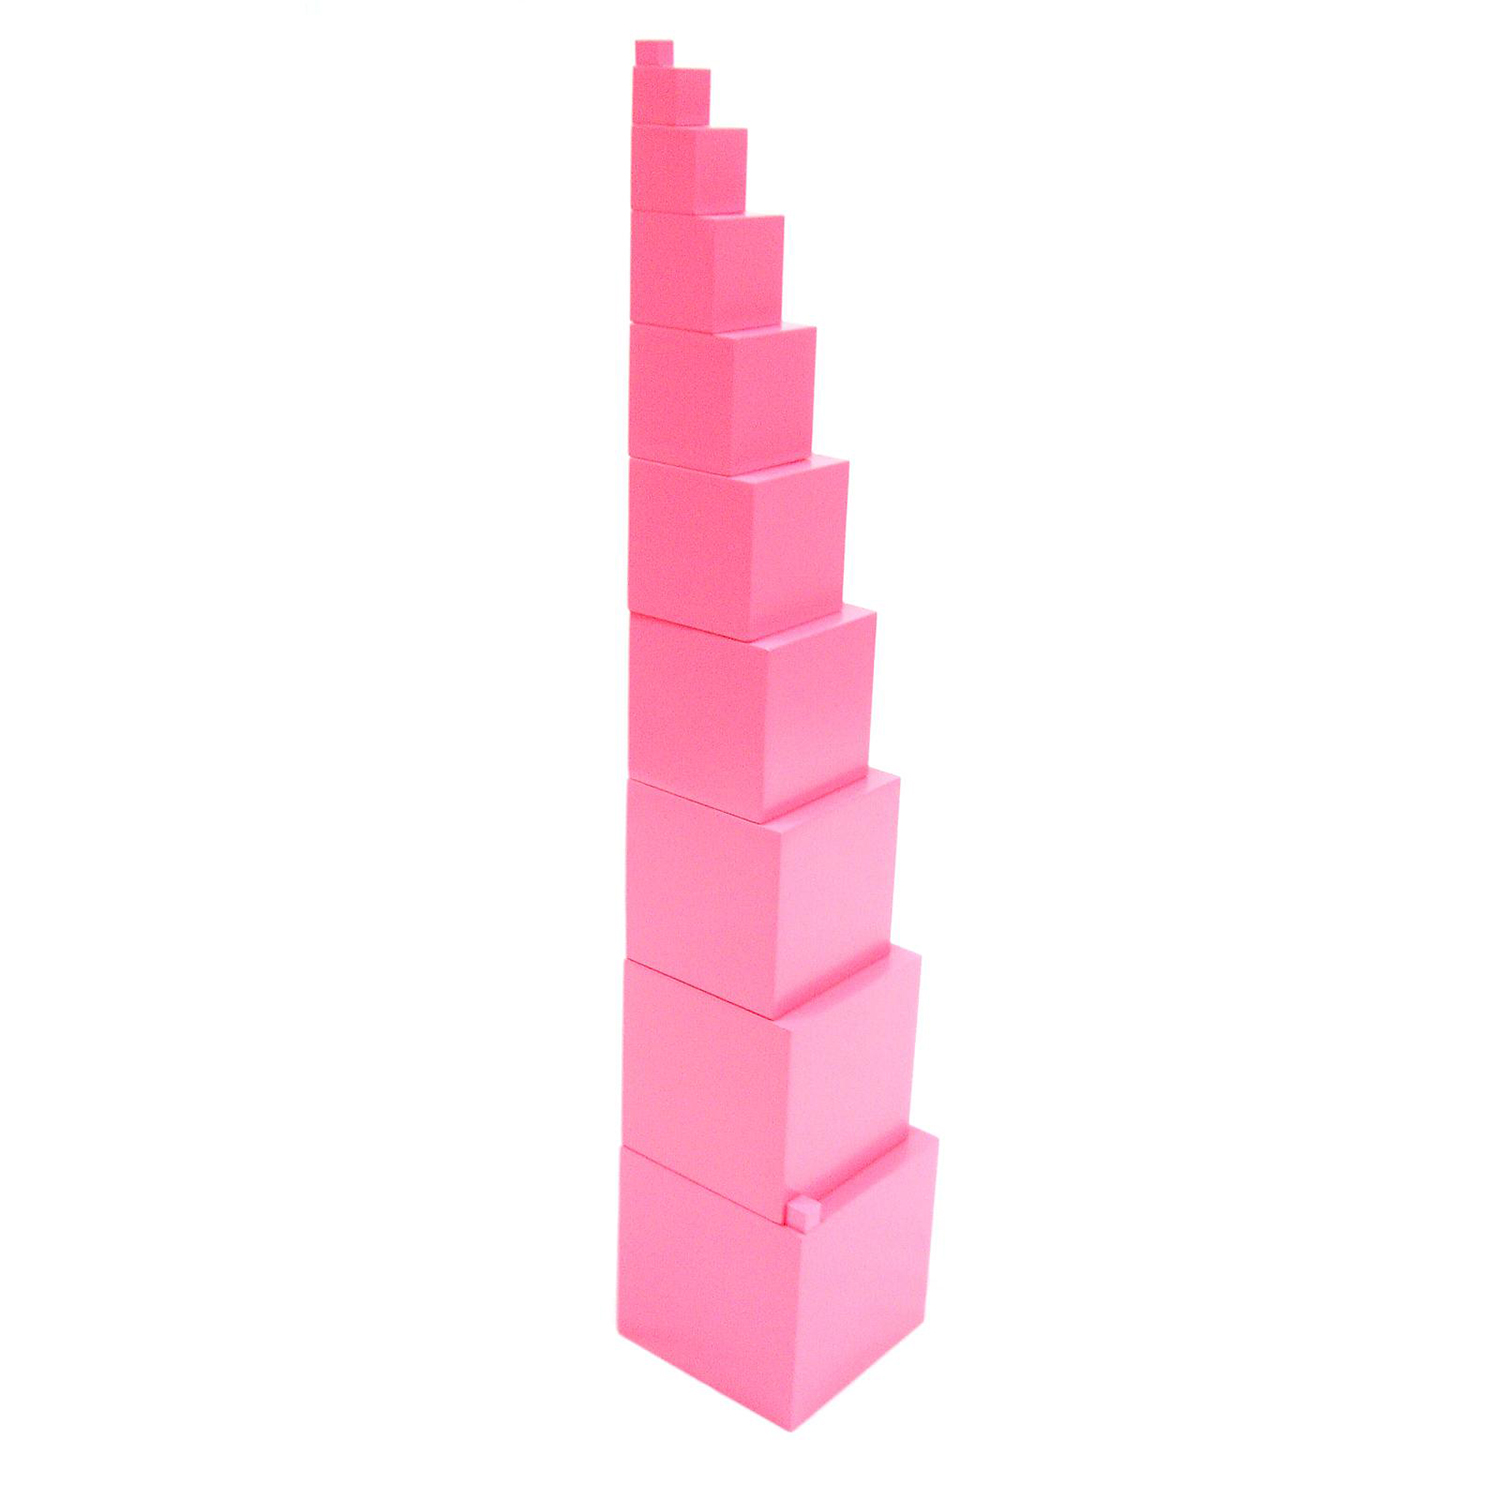 Tháp hồng  Pink Tower Beech wood A048 montessori